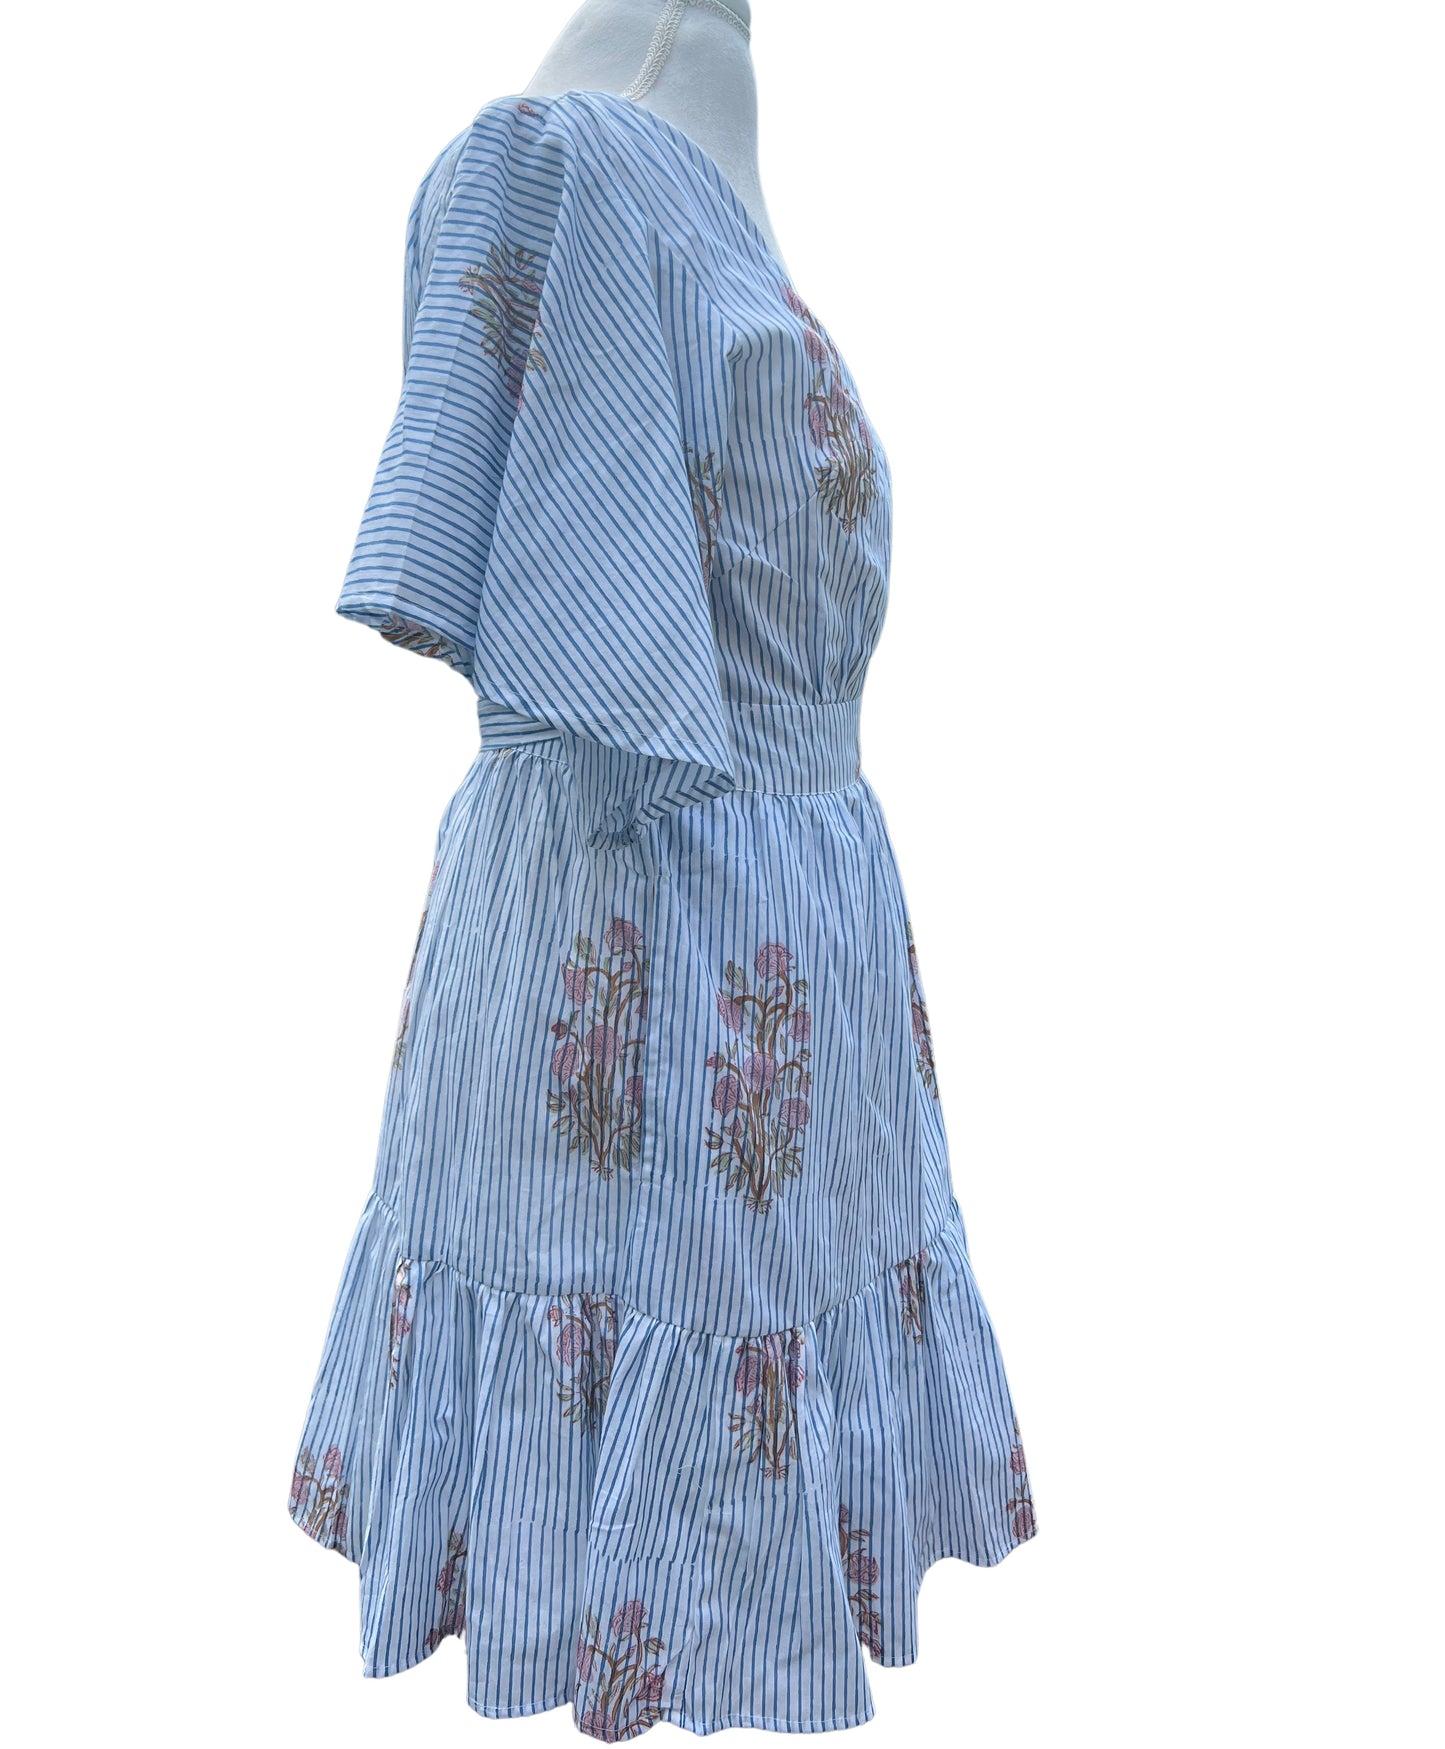 Samantha Wrap Dress, Vintage Floral Stripes